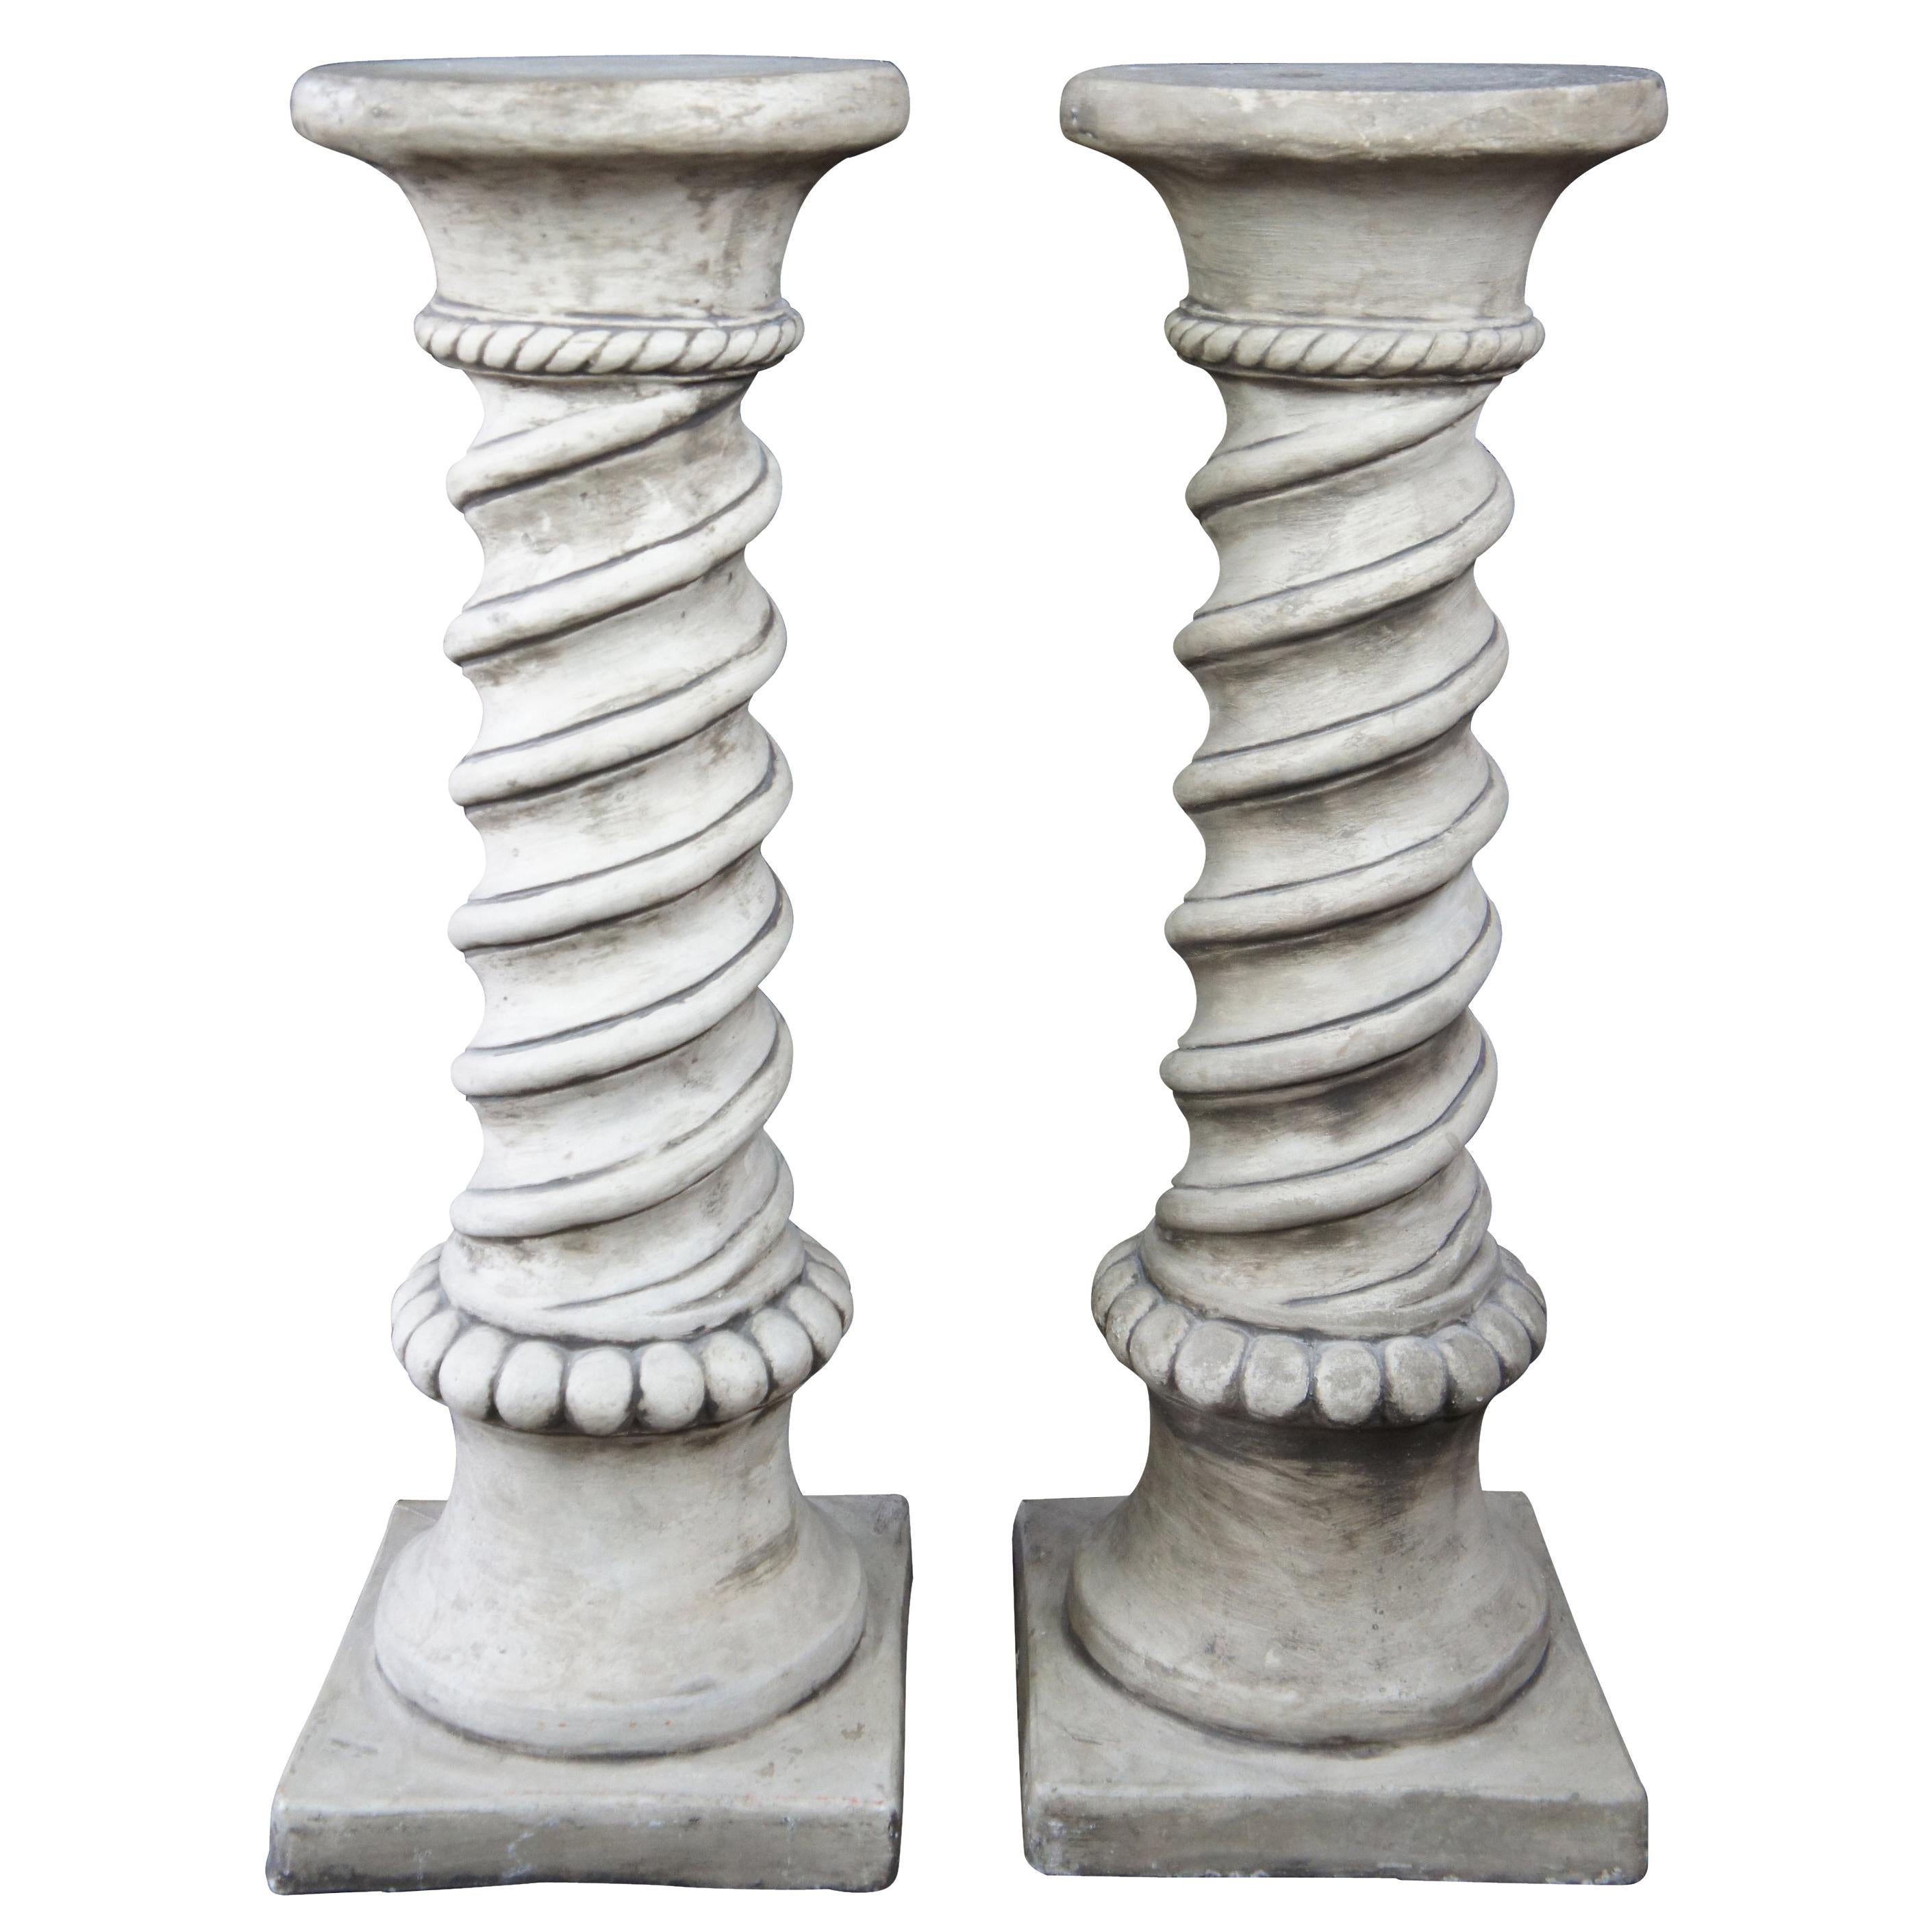 2 Victorian Revival Stone Concrete Barley Twisted Pedestals Columns Plant Stands